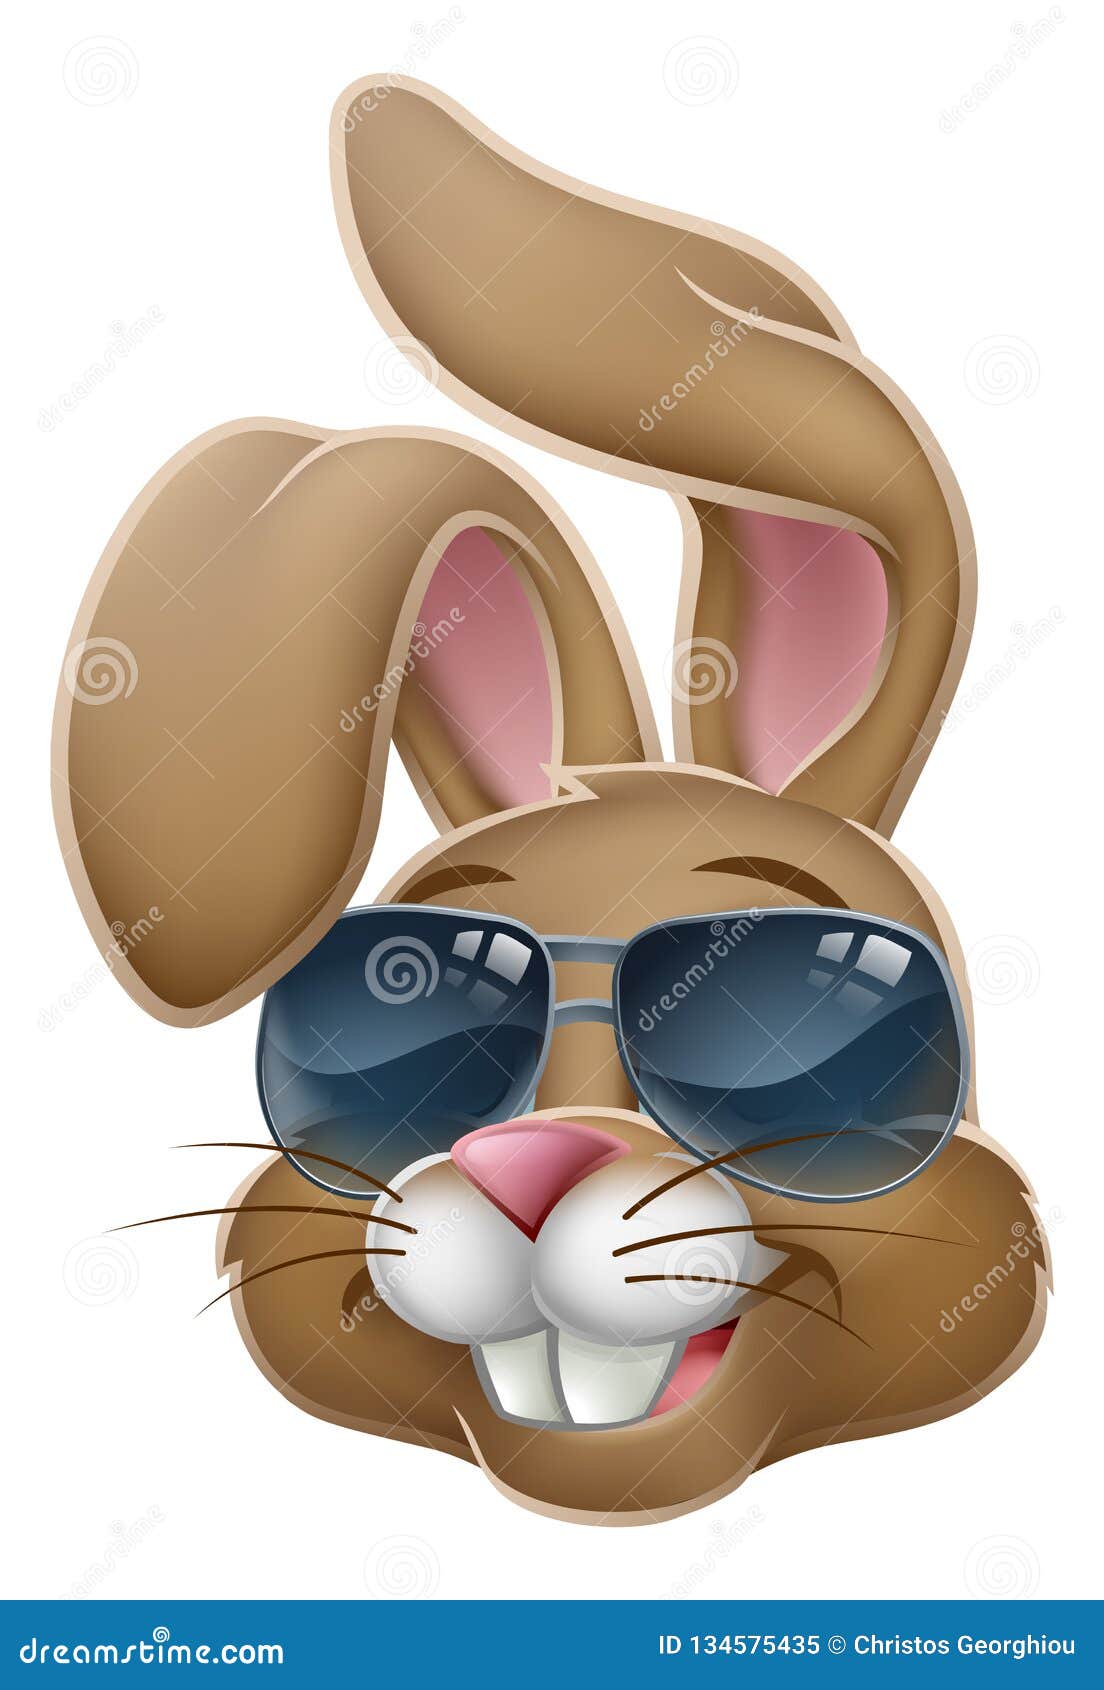 cool easter bunny rabbit in sunglasses cartoon